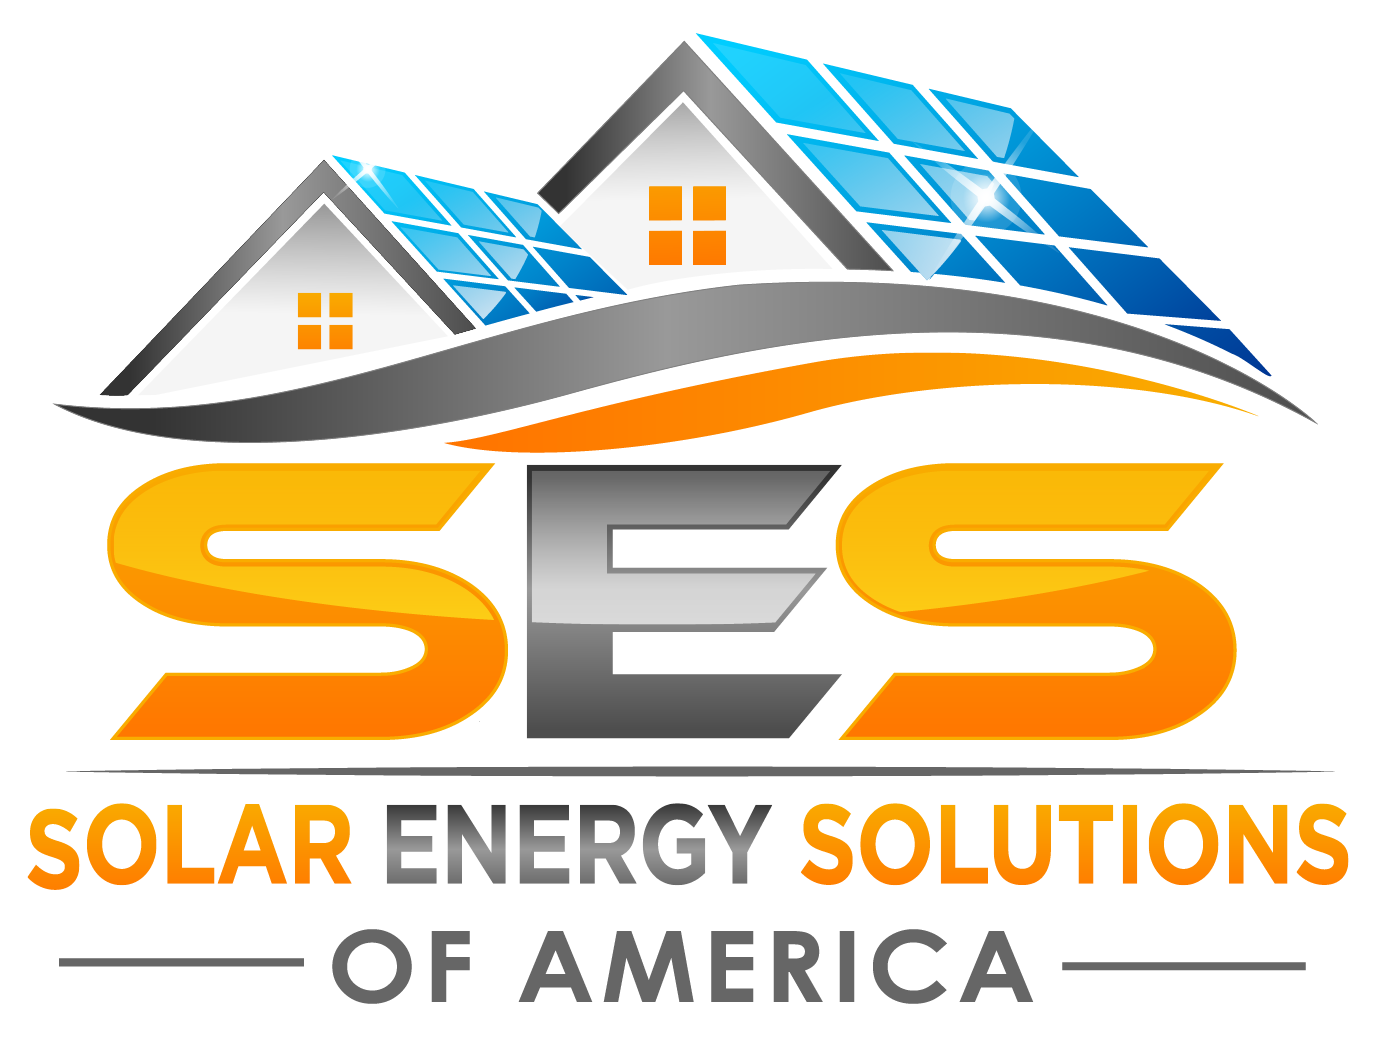 Solar Energy Solutions of America logo